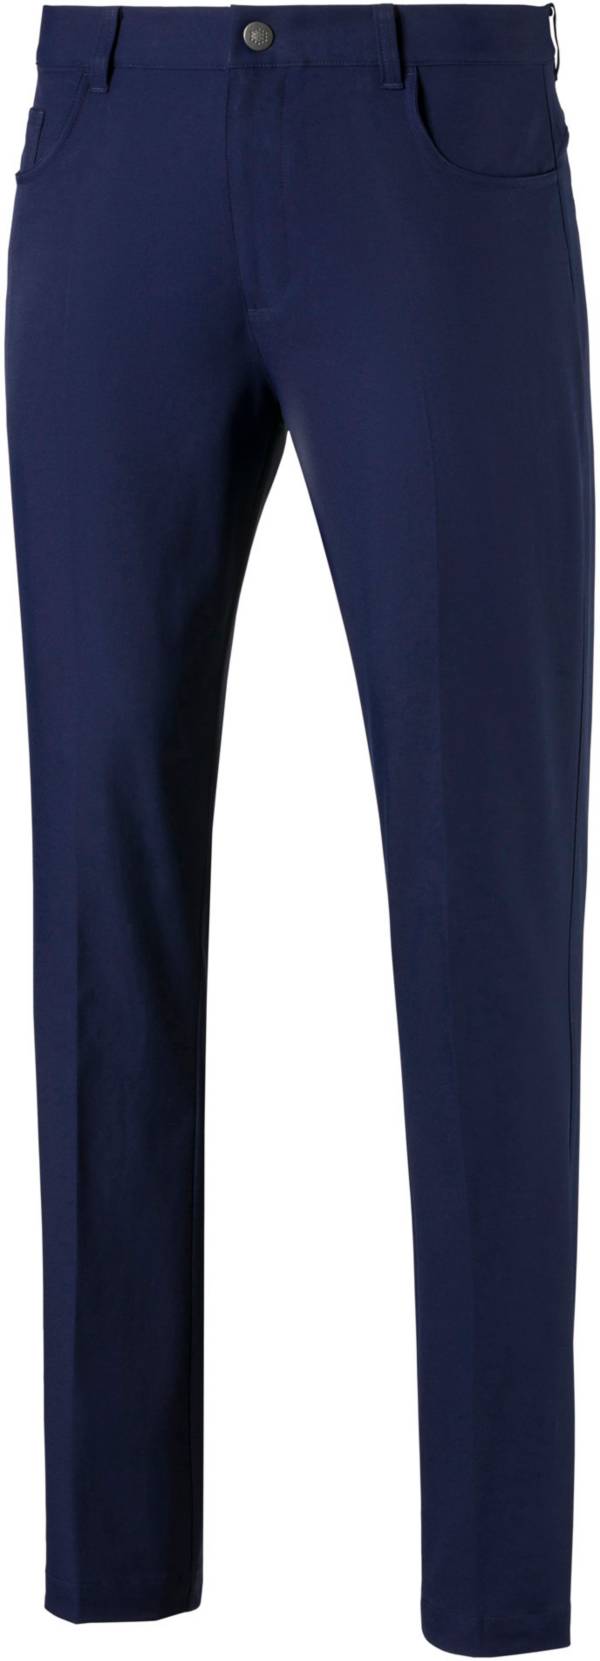 PUMA Men's Jackpot 5 Pocket Golf Pants product image